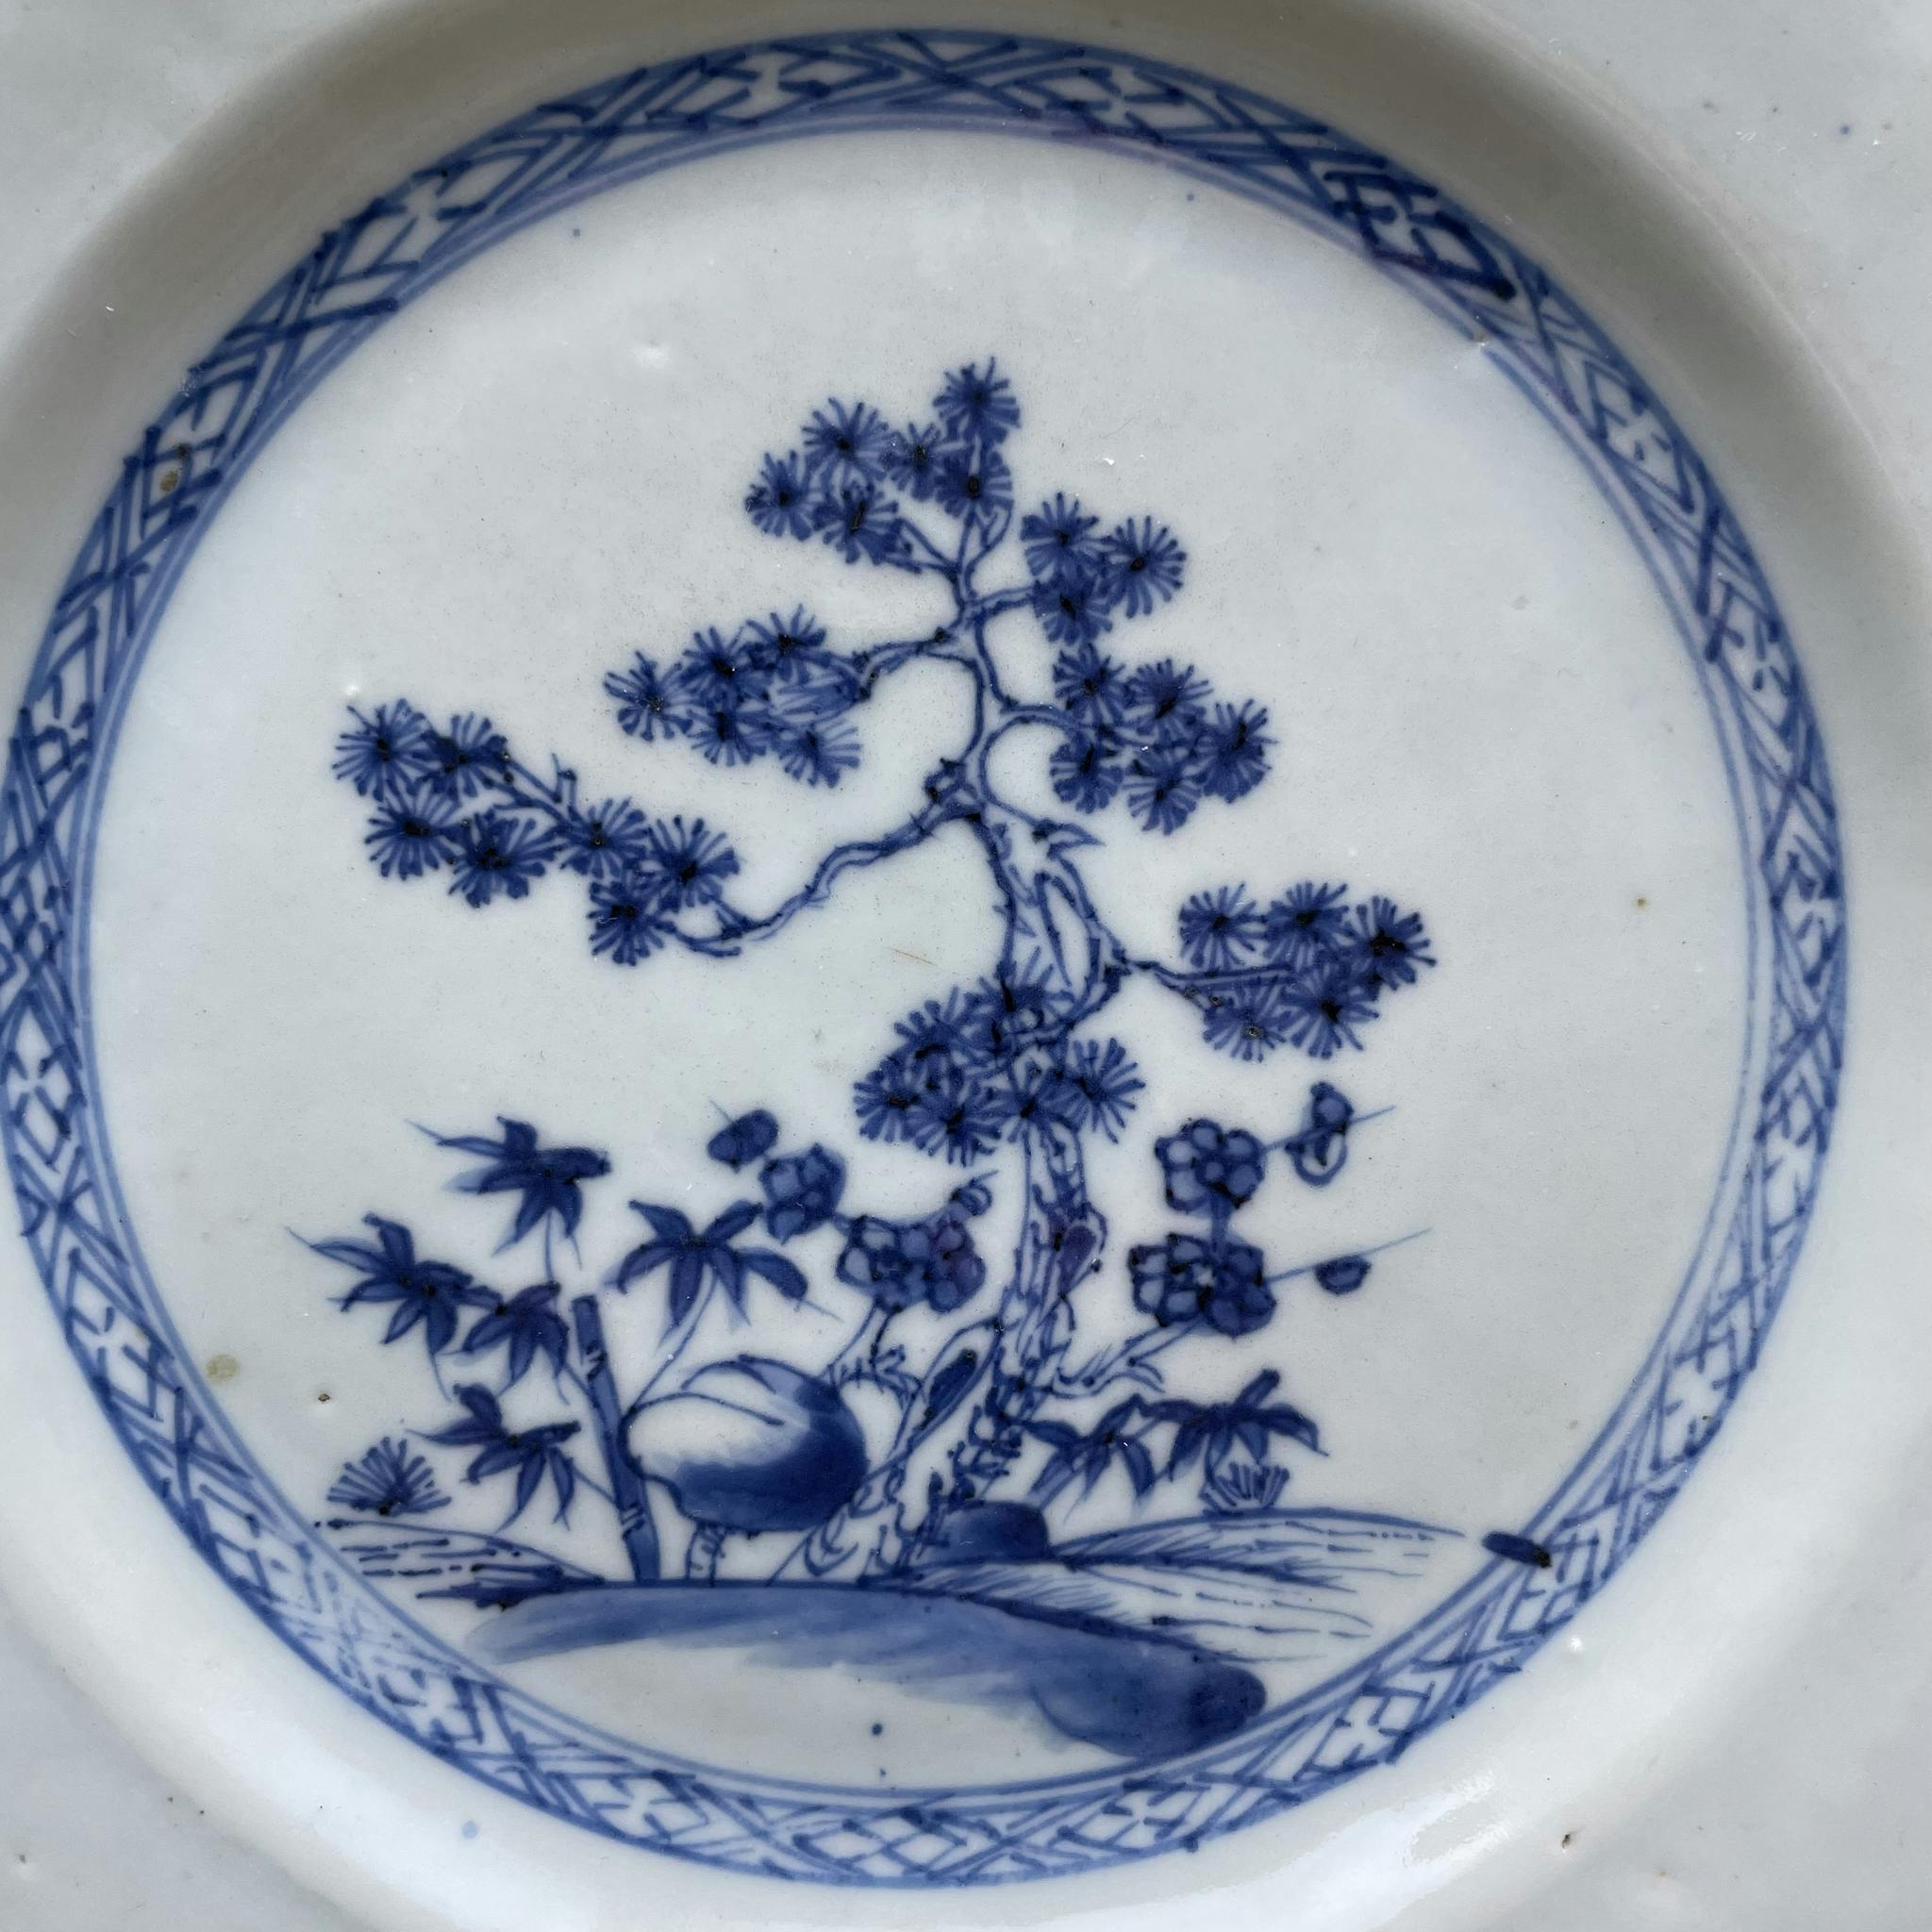 Antique Chinese, "Three friends of winter", "岁寒三友" Qianlong period plate #1202